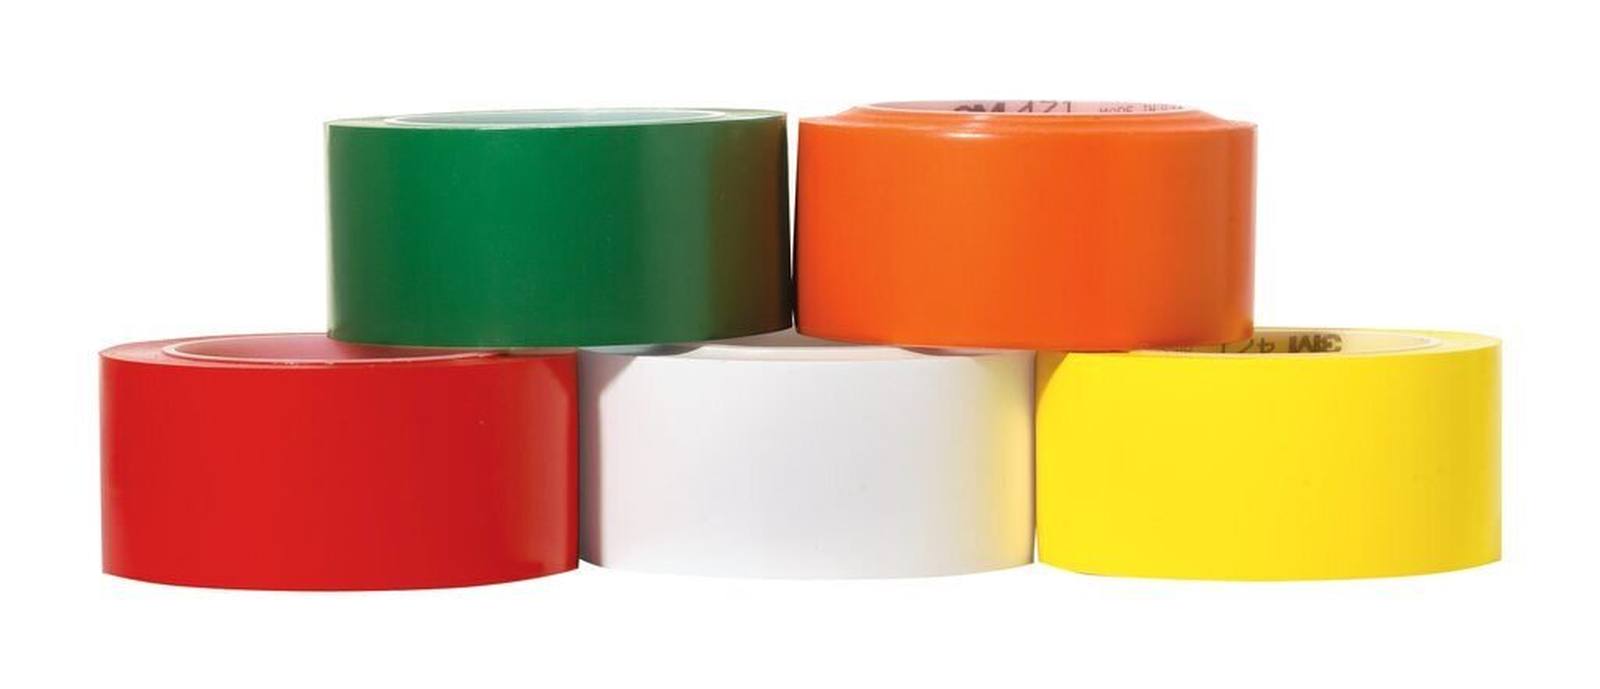 3M Soft PVC adhesive tape 471 F, white, 25.4 mm x 33 m, 0.13 mm